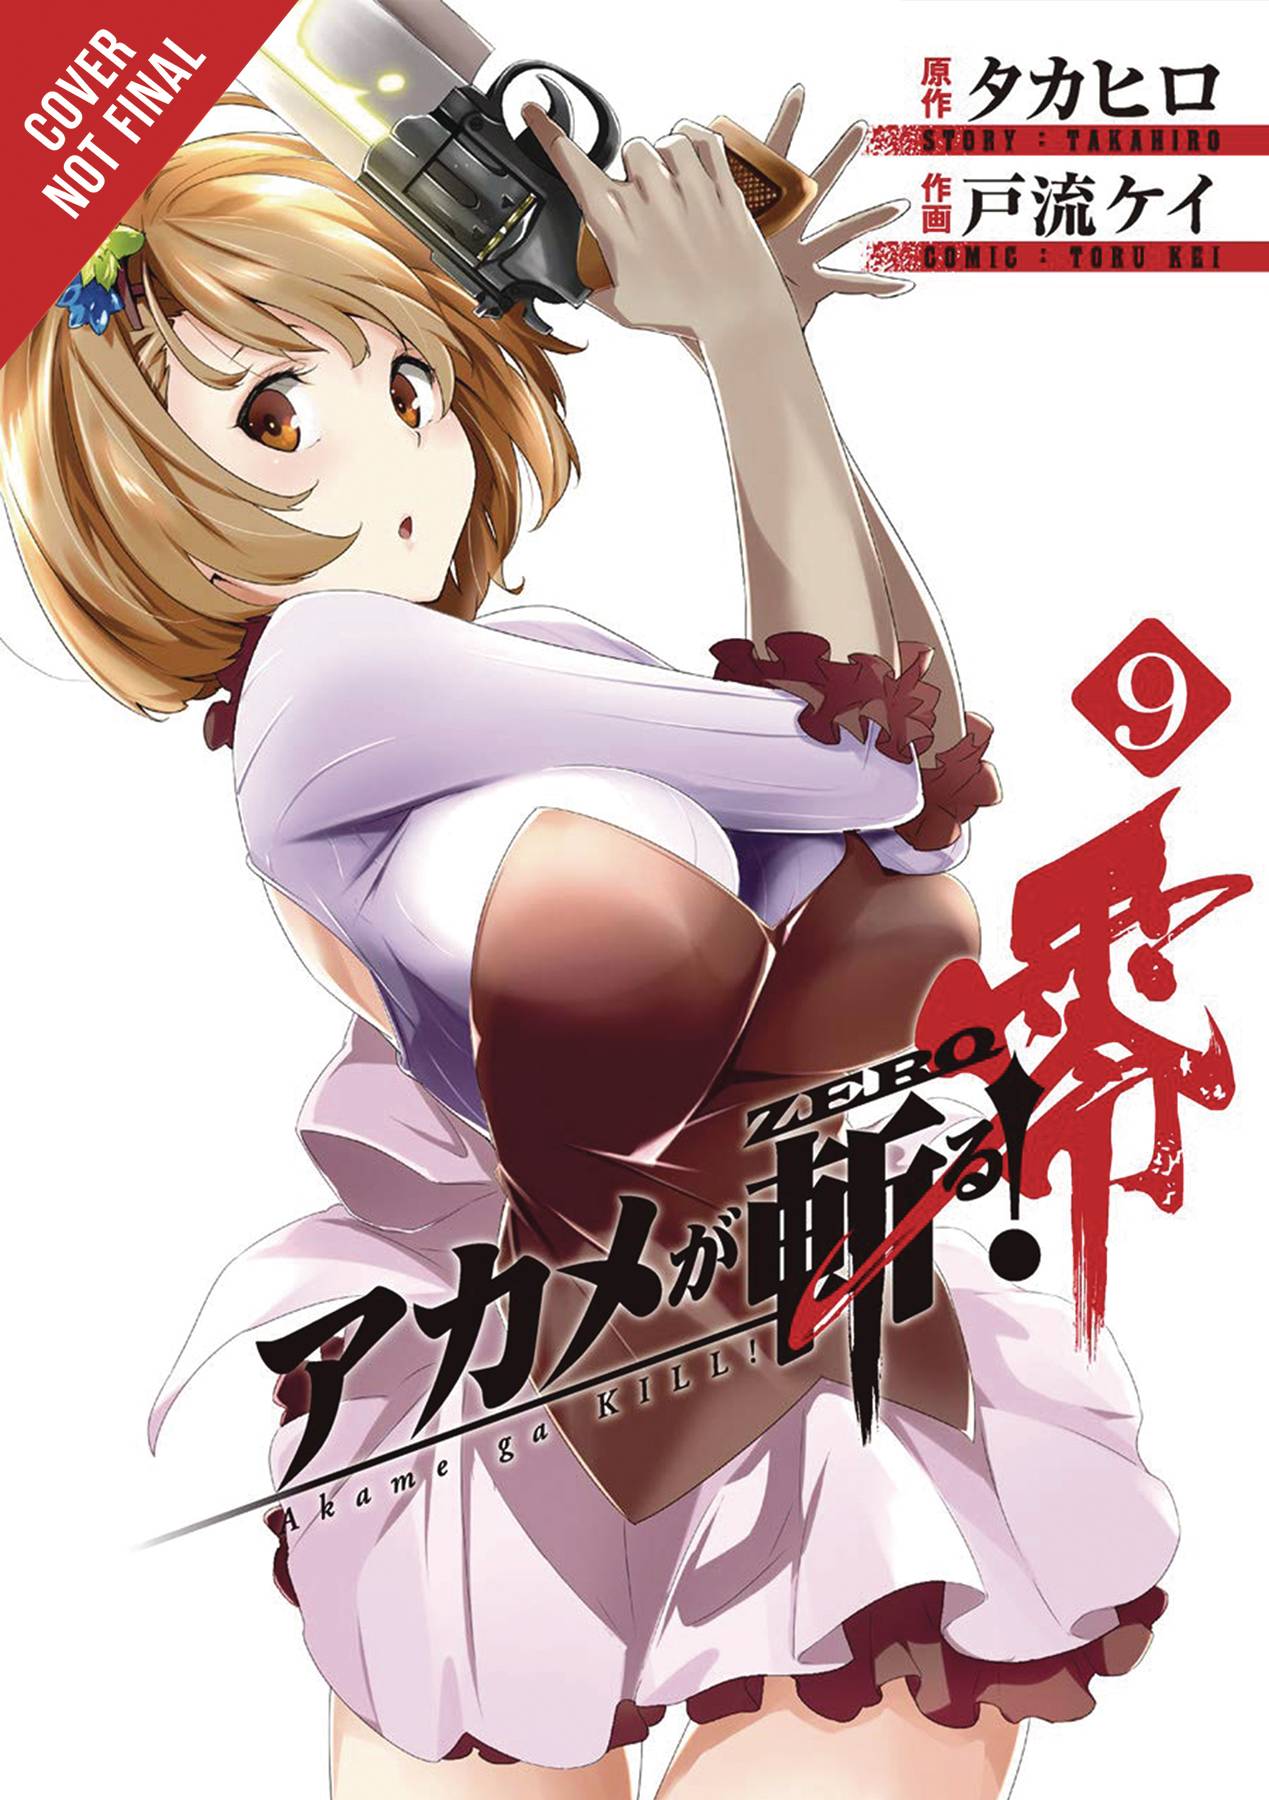 Akame Ga Kill Zero Manga Volume 9